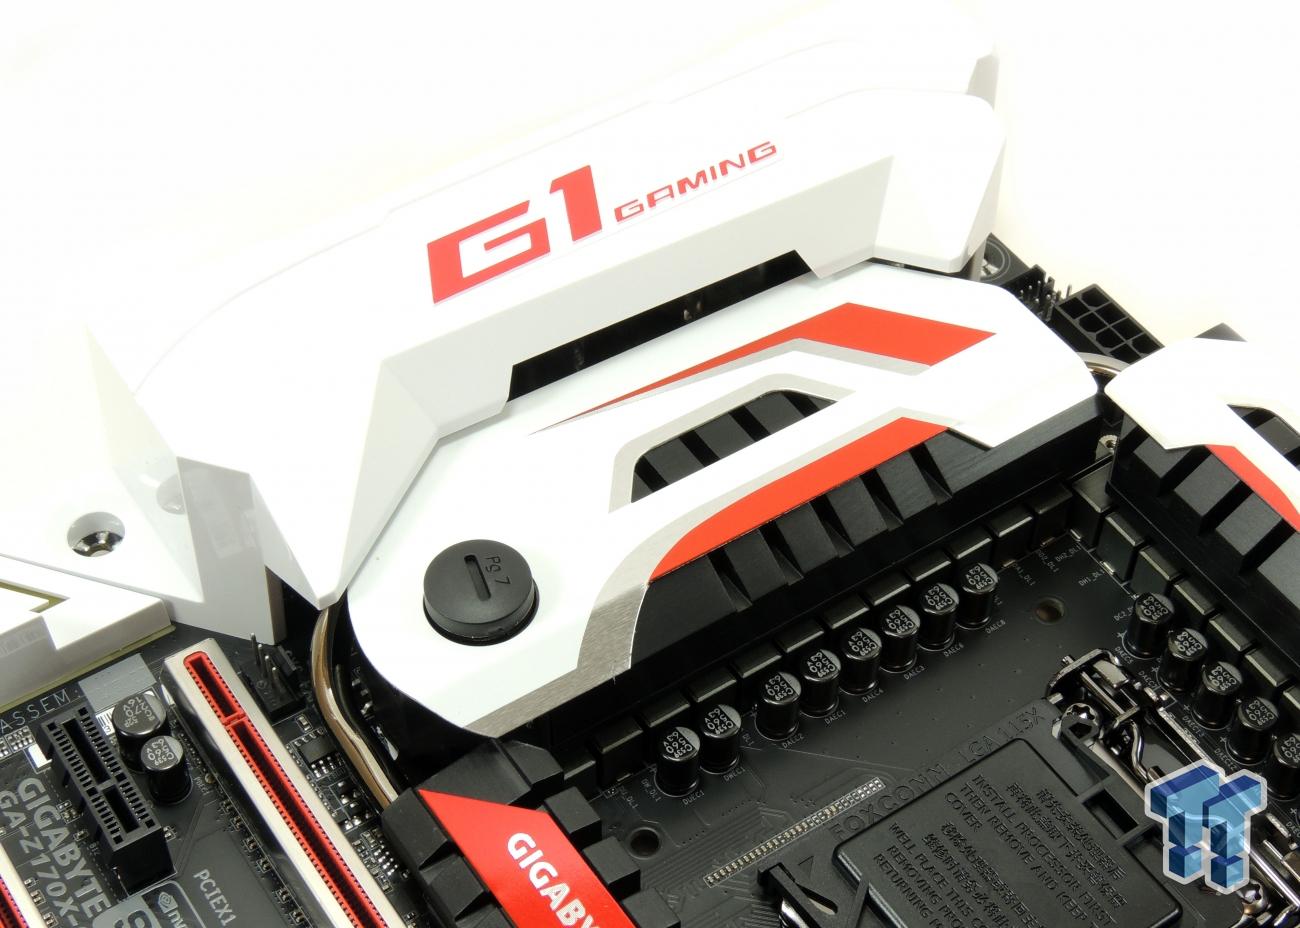 GIGABYTE Z170X-Gaming G1 (Intel Z170) Motherboard Review